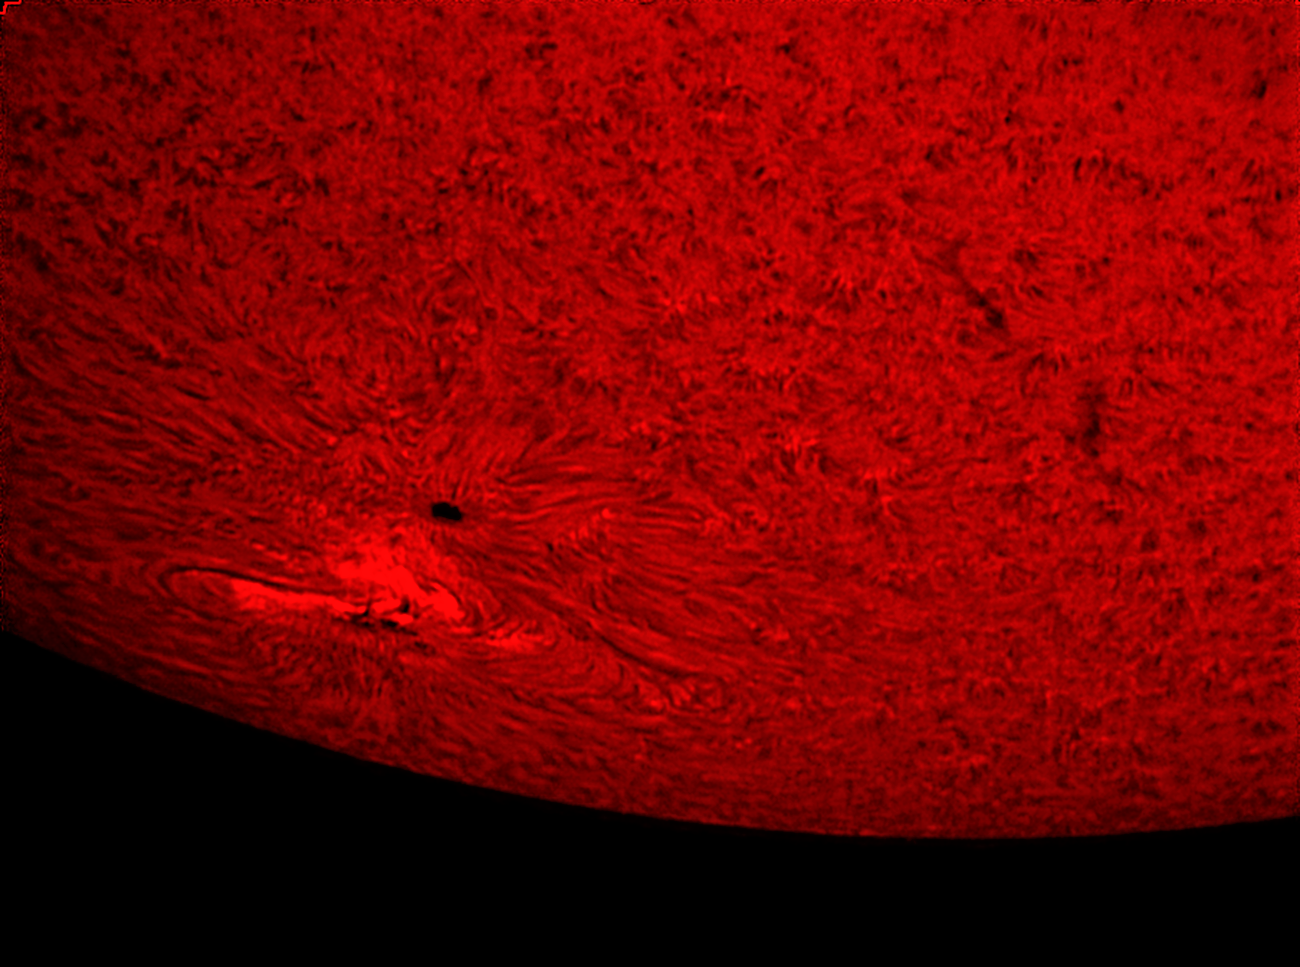 Sonnenfleck 2781 am 04. November 20 im H-Alpha-Licht